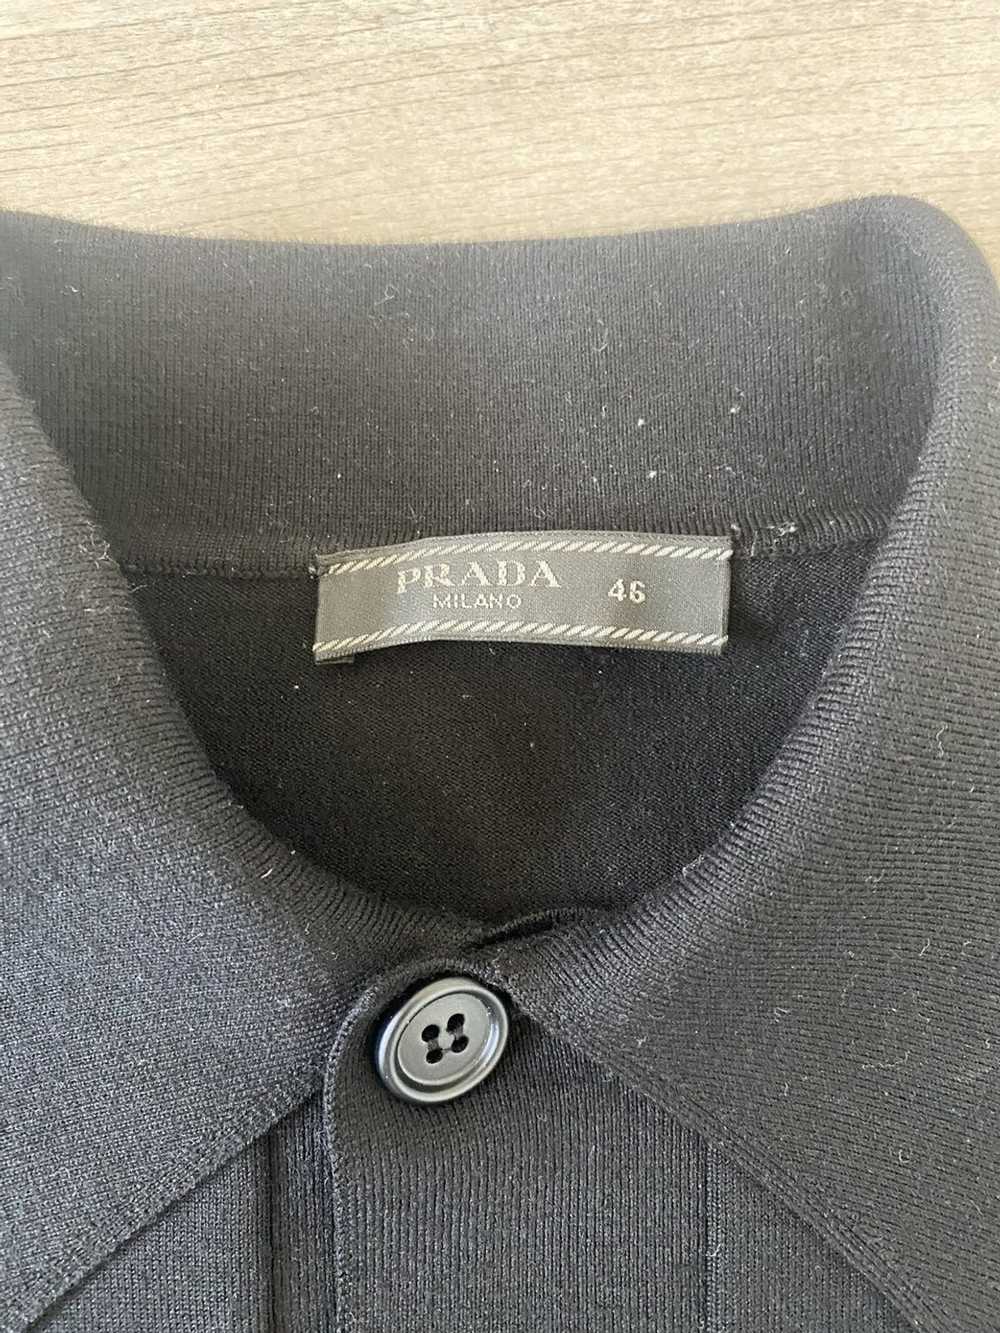 Prada Prada oversized collar shirt - image 4